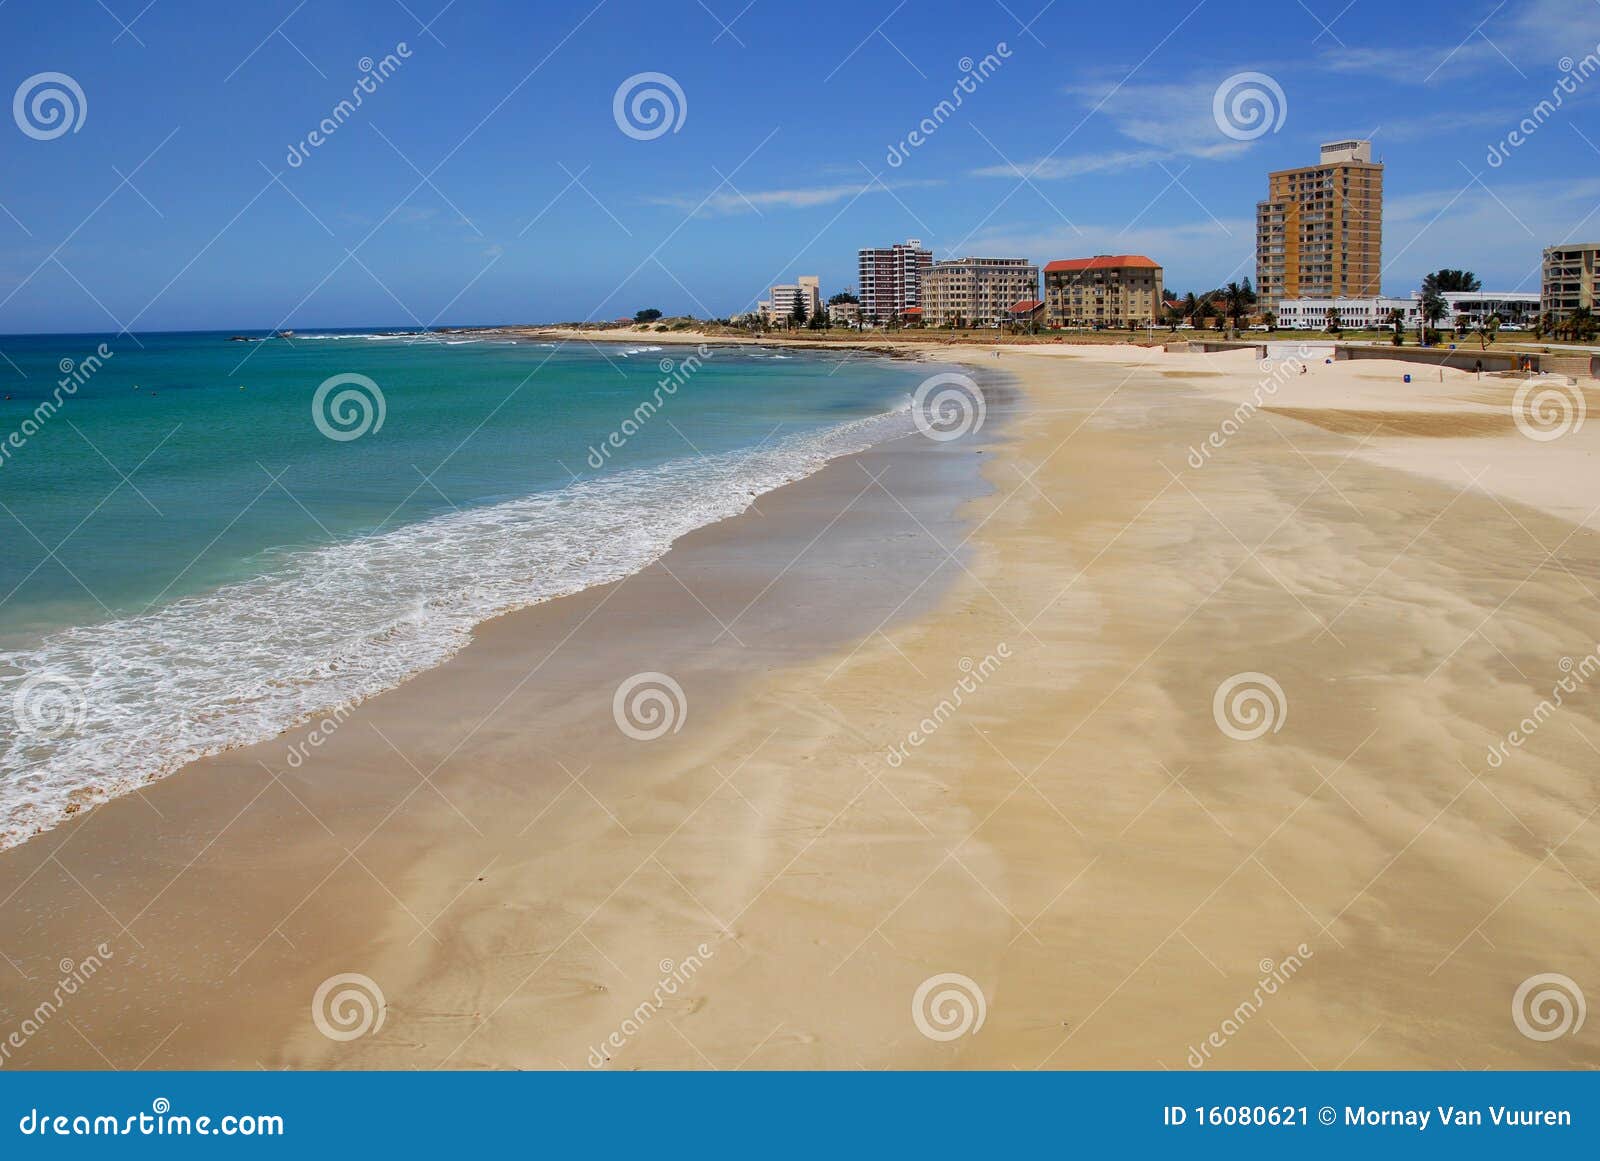 beachfront showing a shoreline